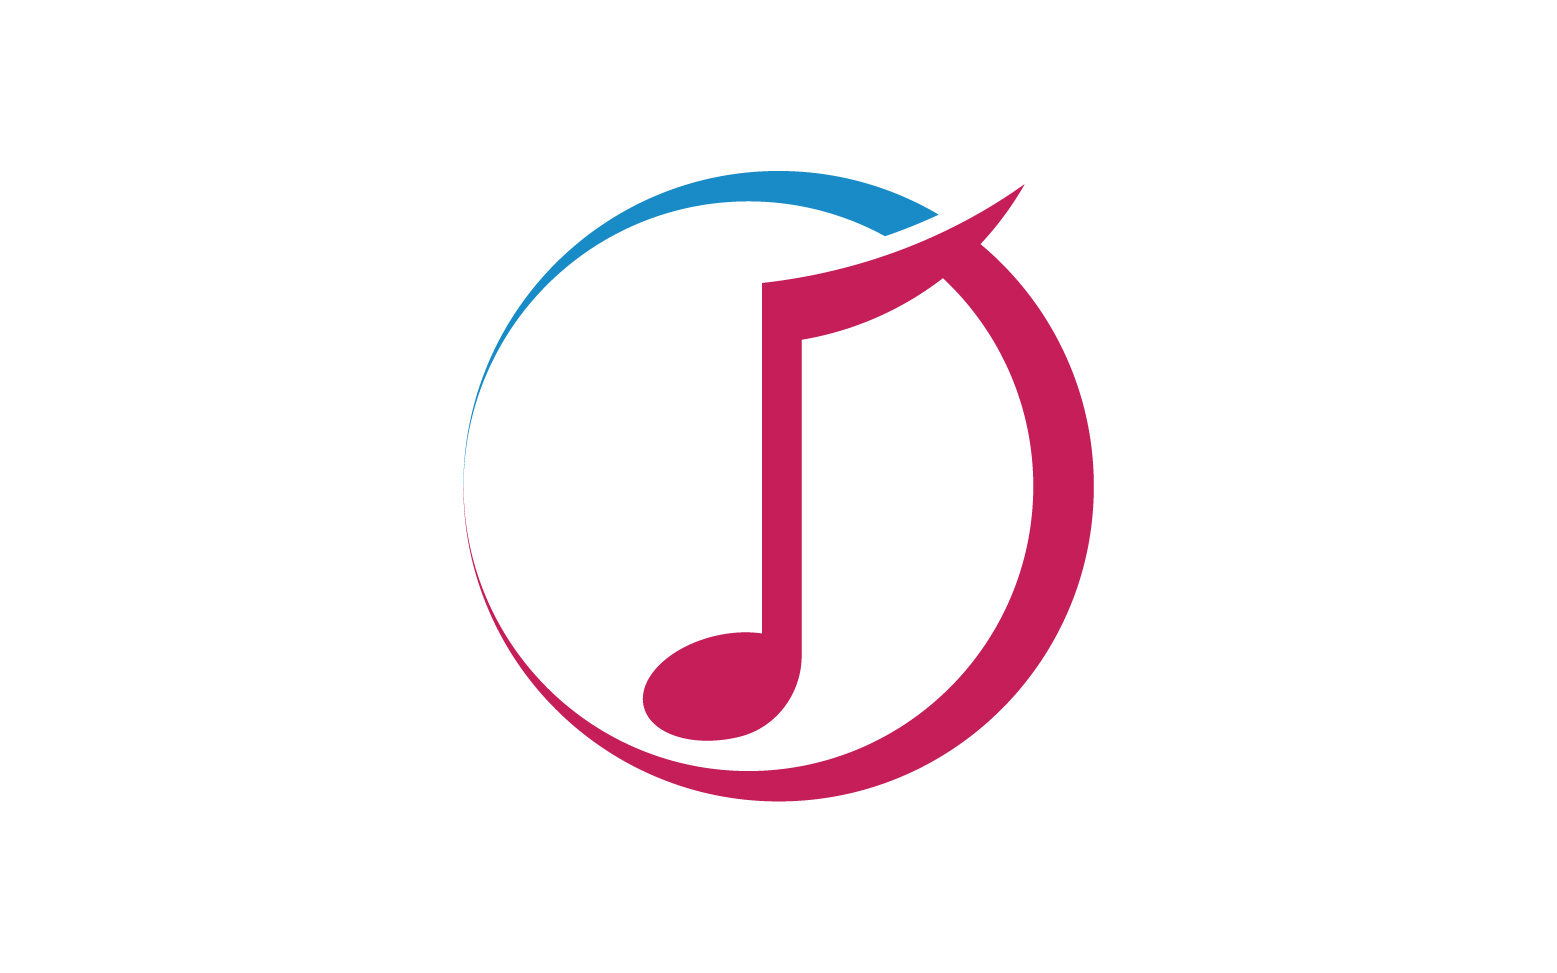 Music sound player app icon logo v.3